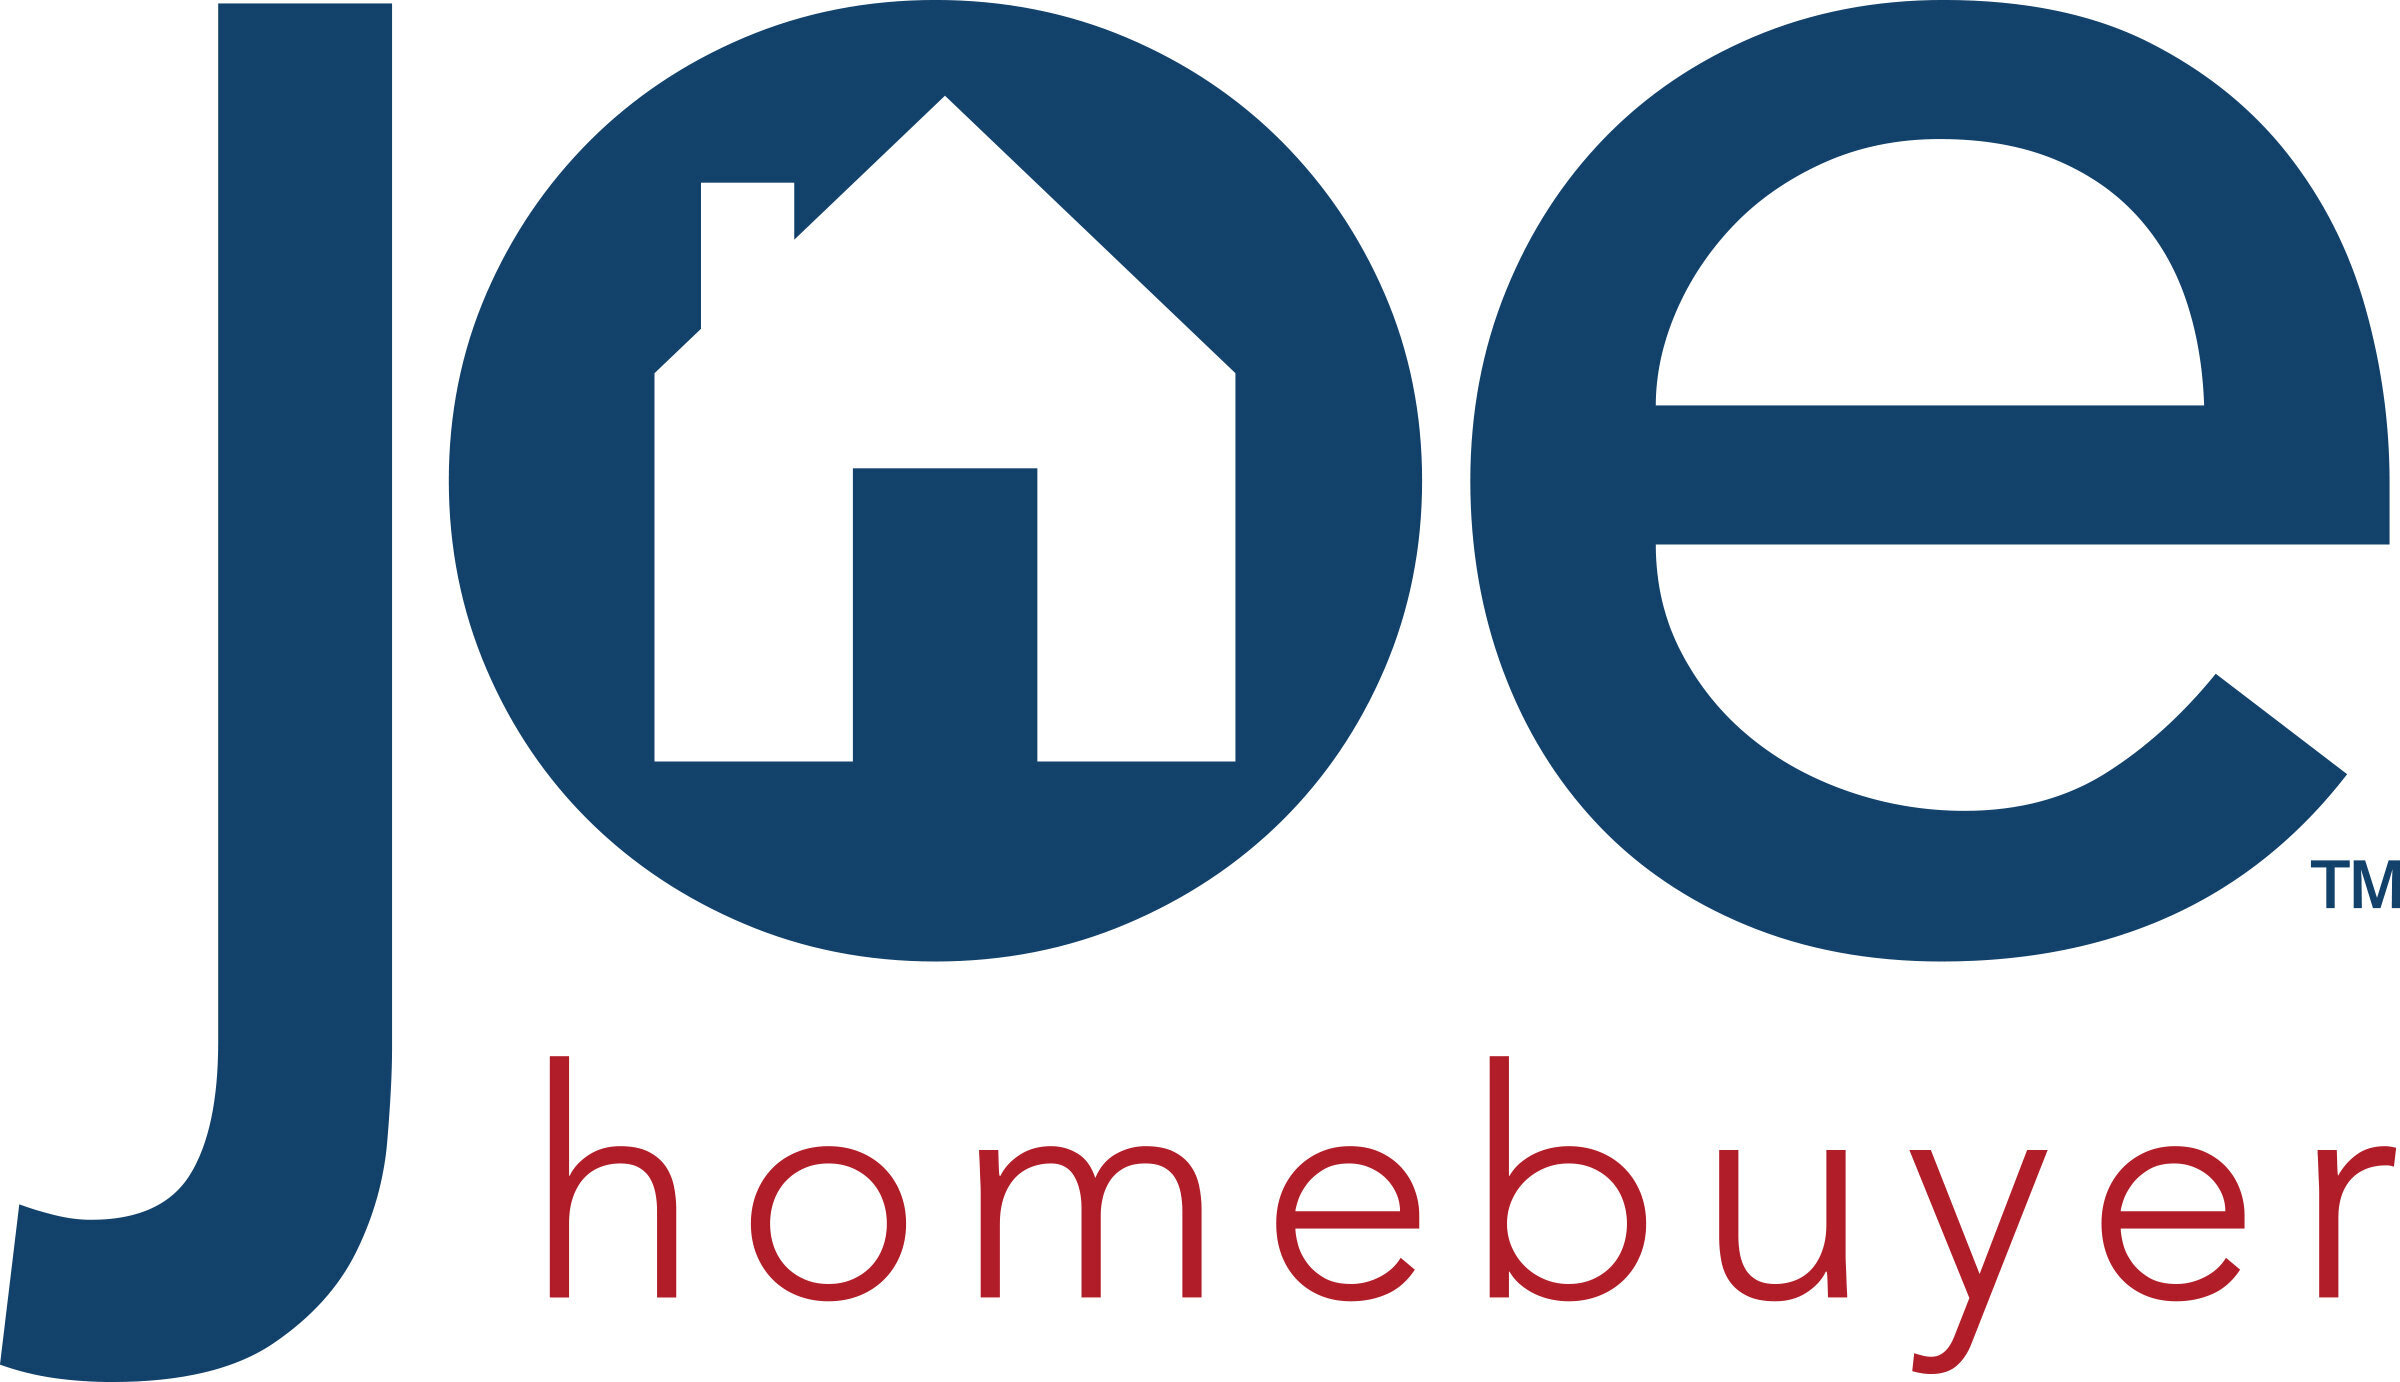 Joe Homebuyer Alabama logo